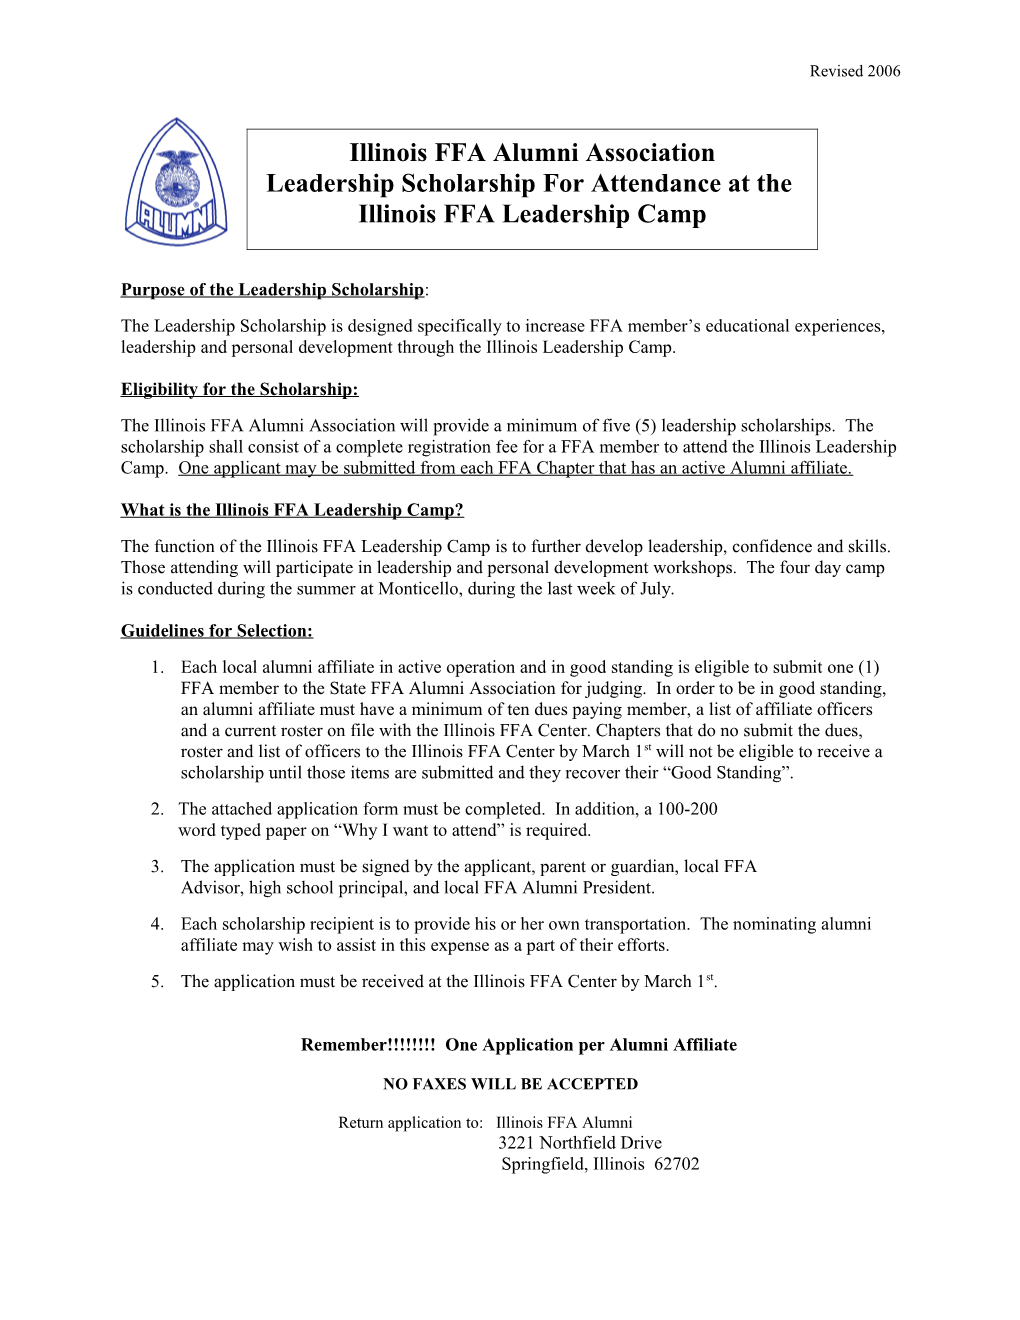 Illinois FFA Alumni Leadership Scholarship